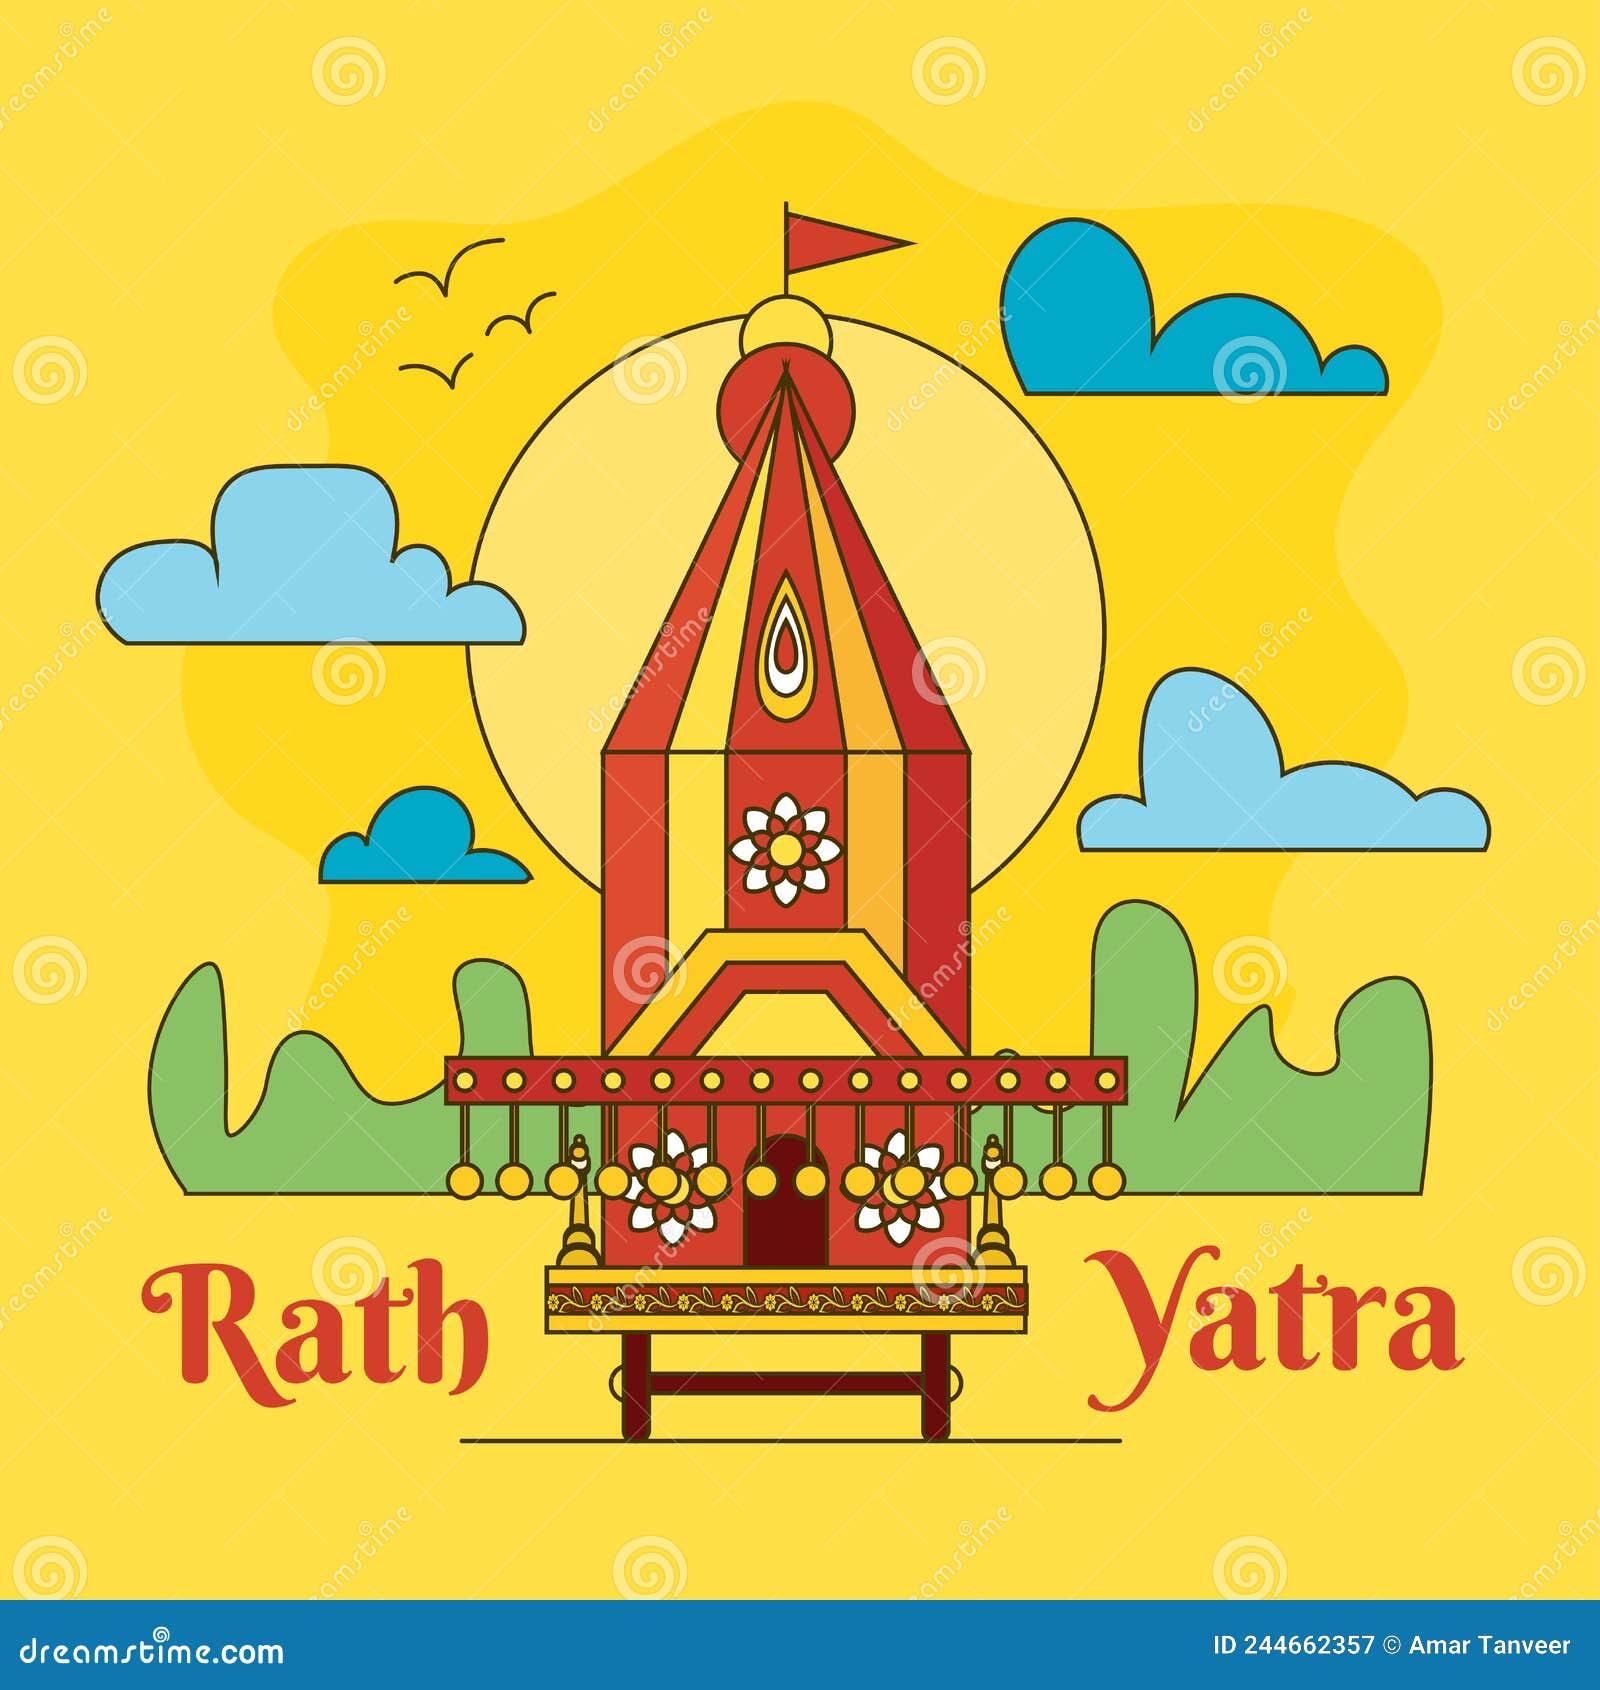 जगन्नाथ पुरी धाम | जगन्नाथ रथ यात्रा | Jagannath Puri Dham | Jagannath Puri  Festival | Jagannath Rath Yatra - HKT Bharat UPSC